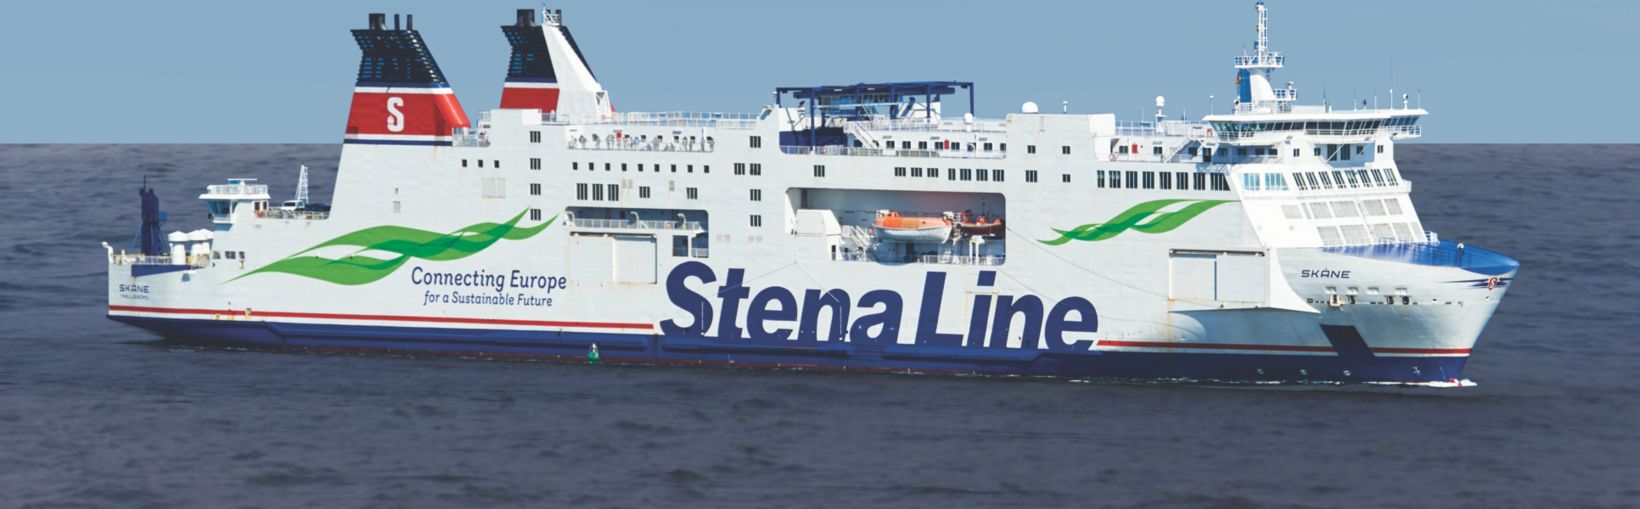 Skane ferry at sea                 